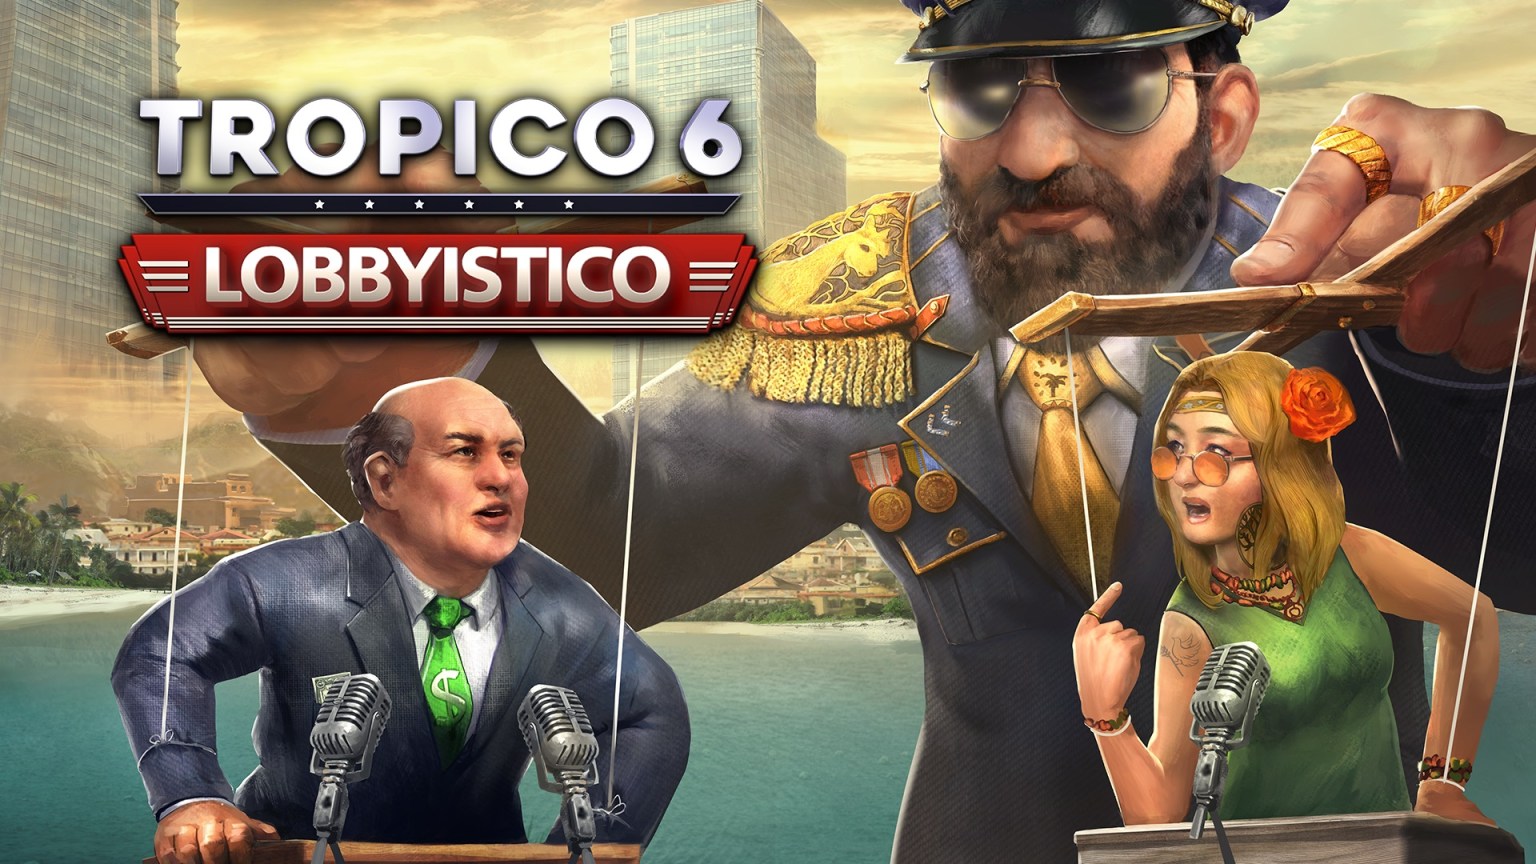 Tropico 6 - Lobbyistico 